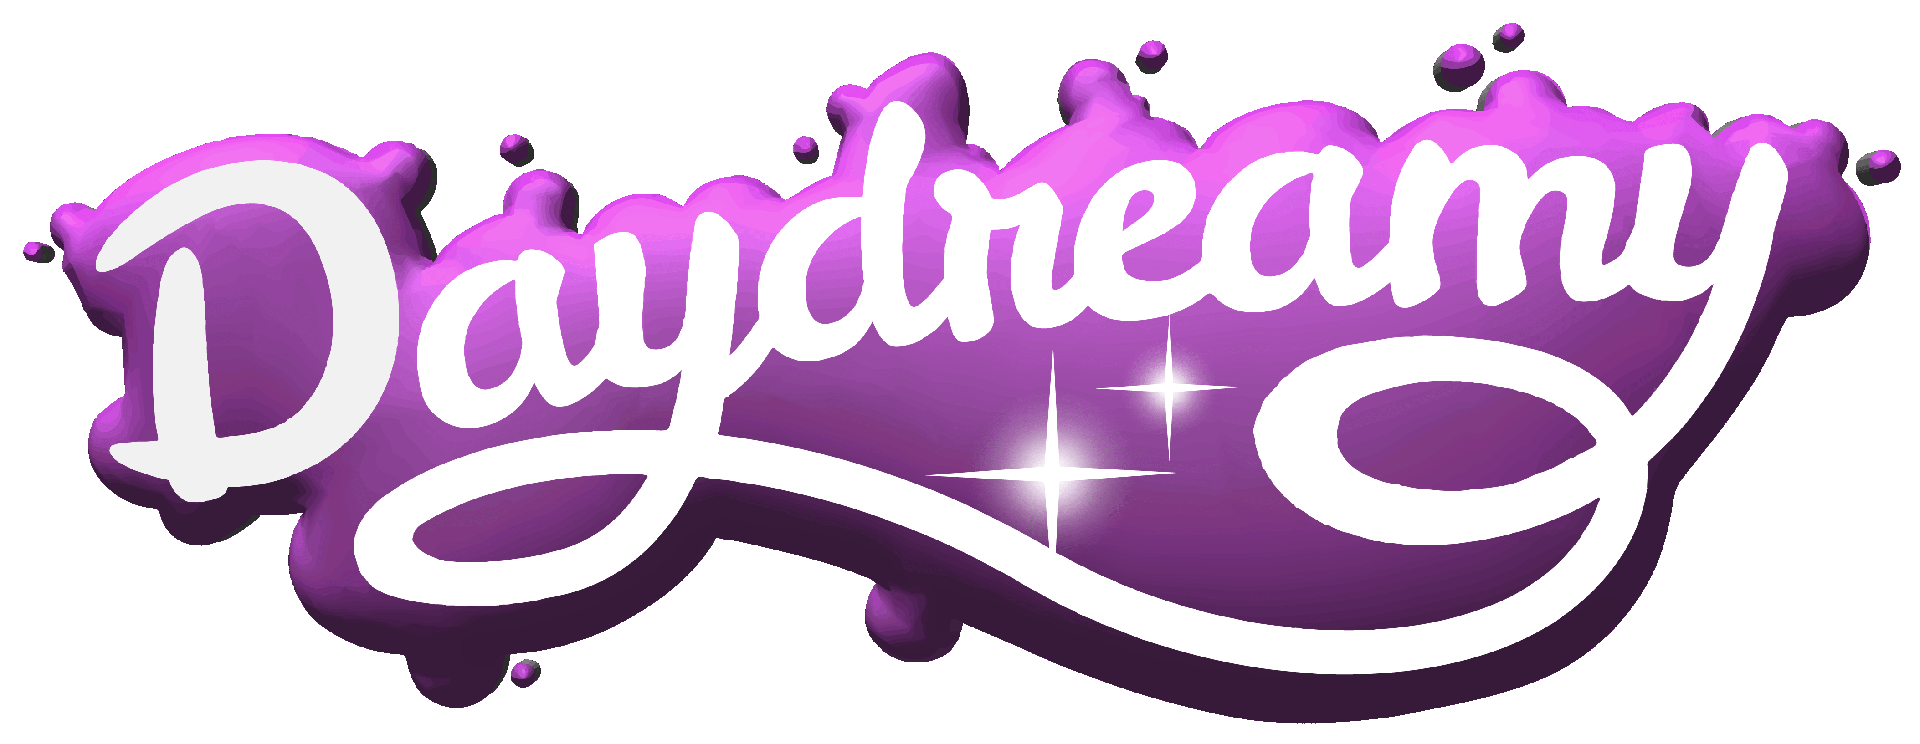 Logo Daydreamy